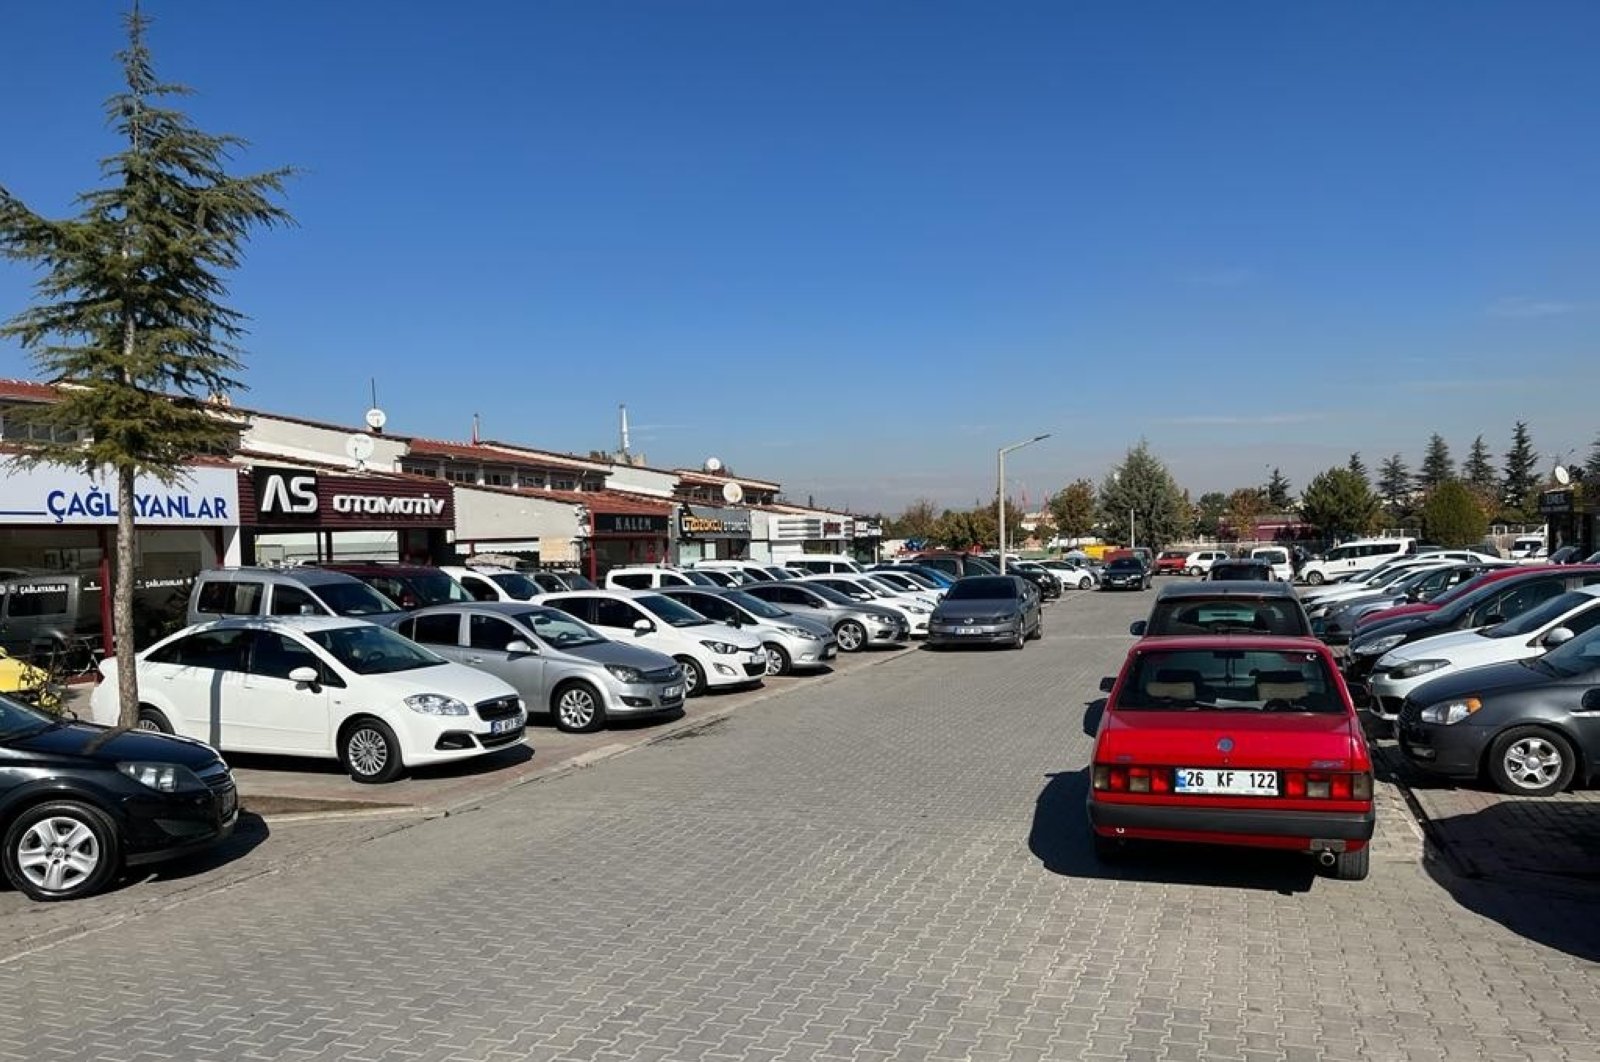 Penjualan mobil Turki melonjak hampir 15% di bulan Oktober